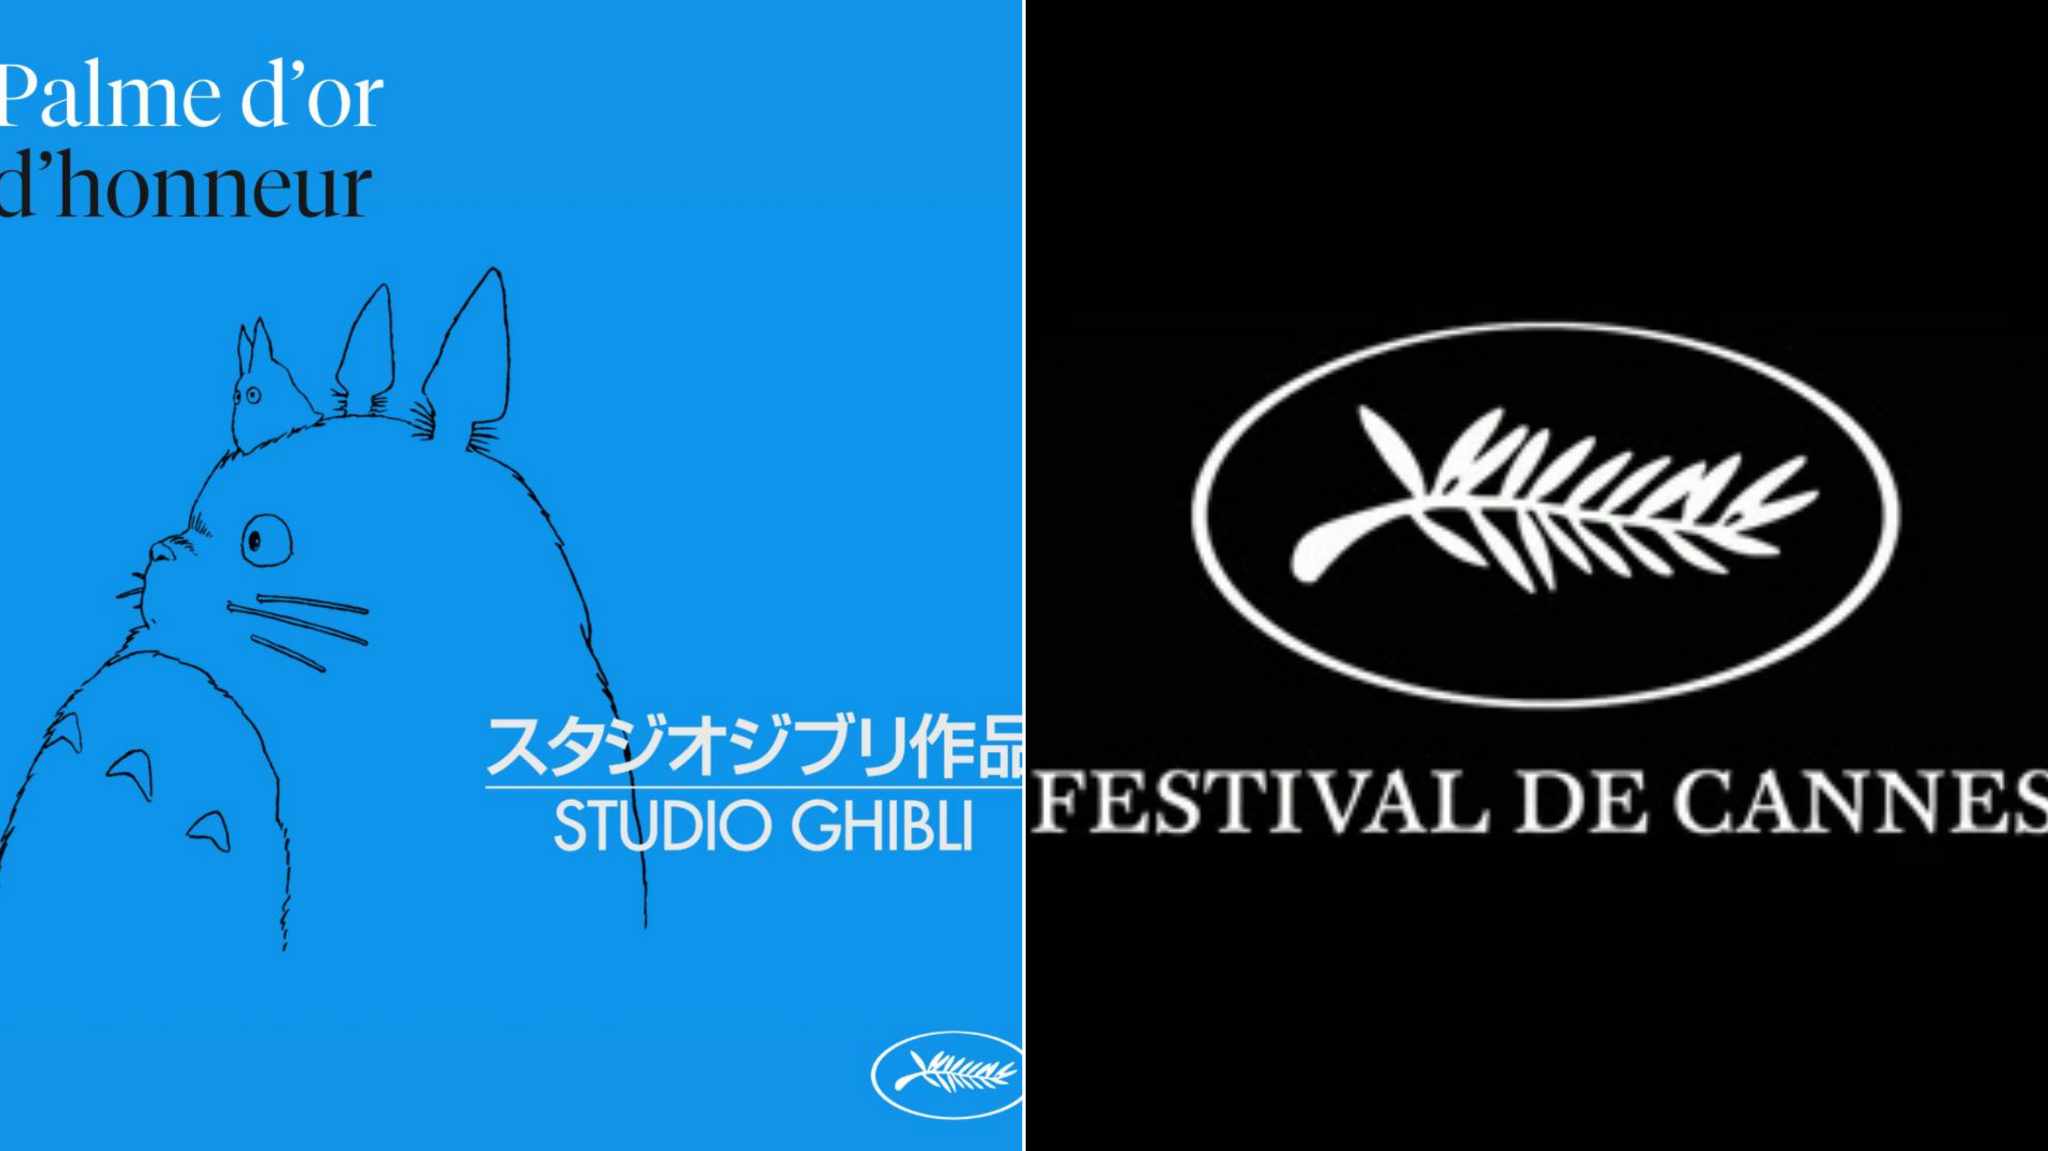 Studio Ghibli - Palma d'Oro onoraria a Cannes